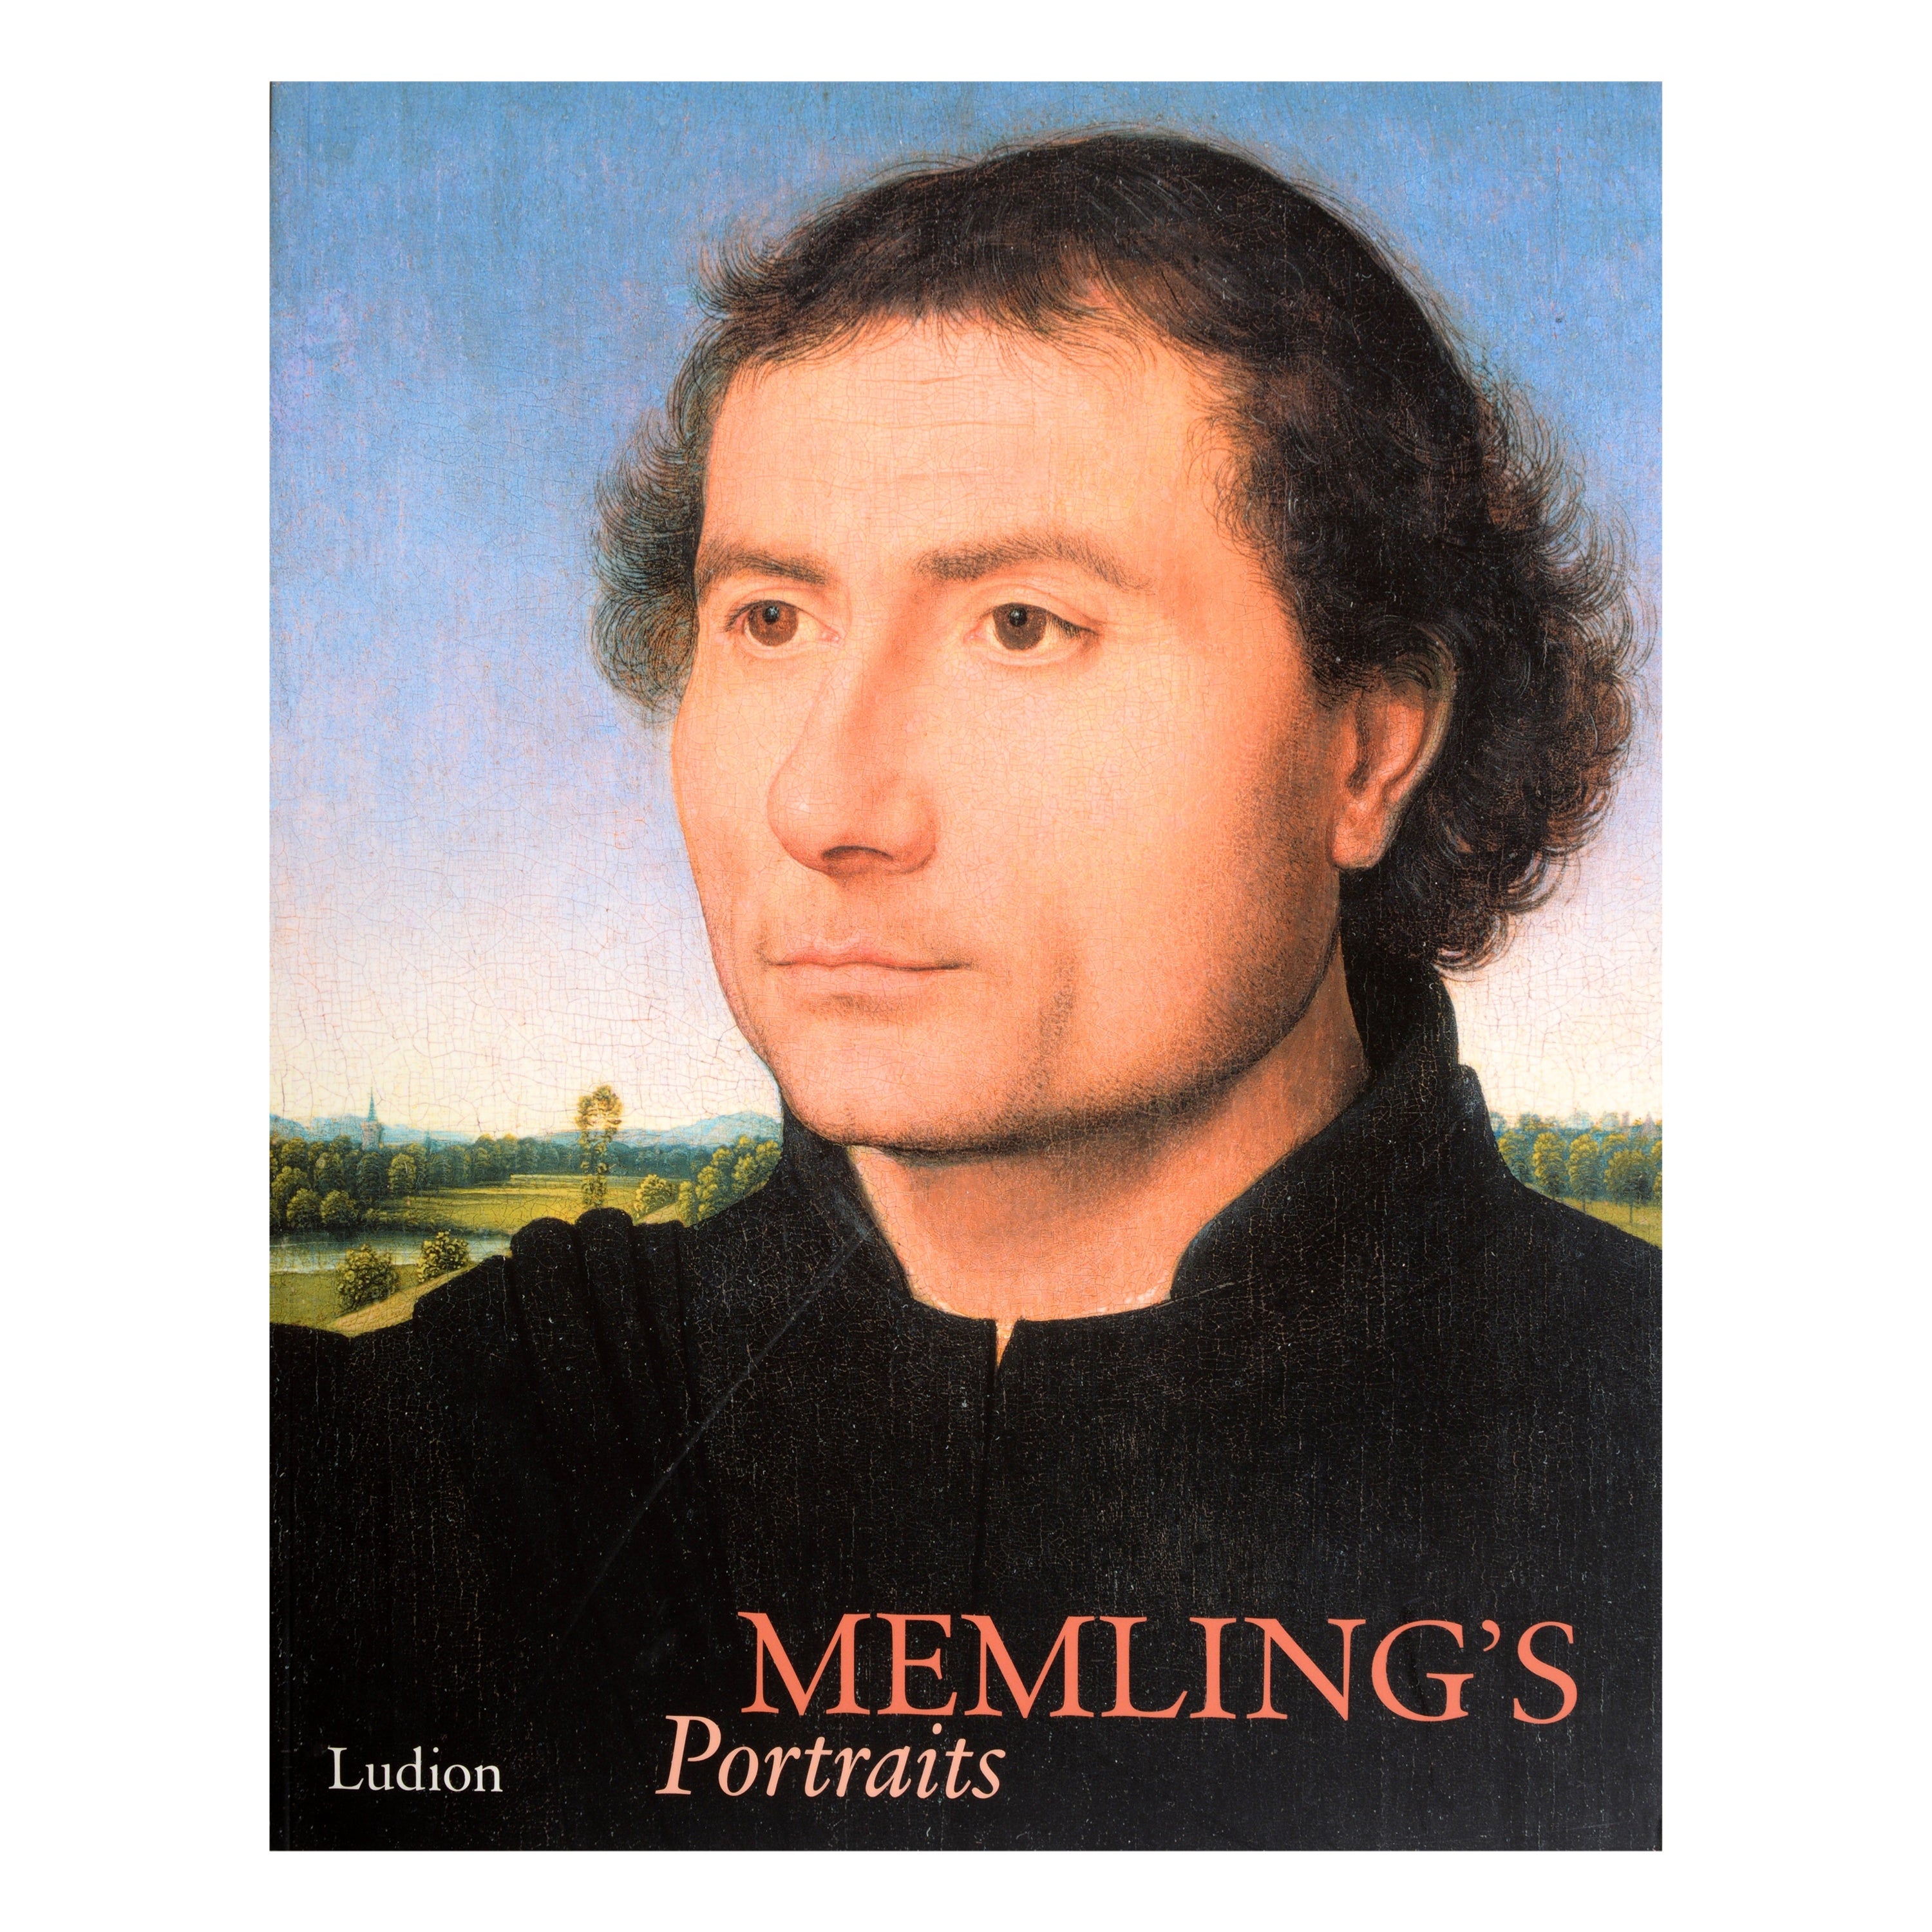 Memling's Portraits by Till Borchert, 1st Ed Exhibition Catalog